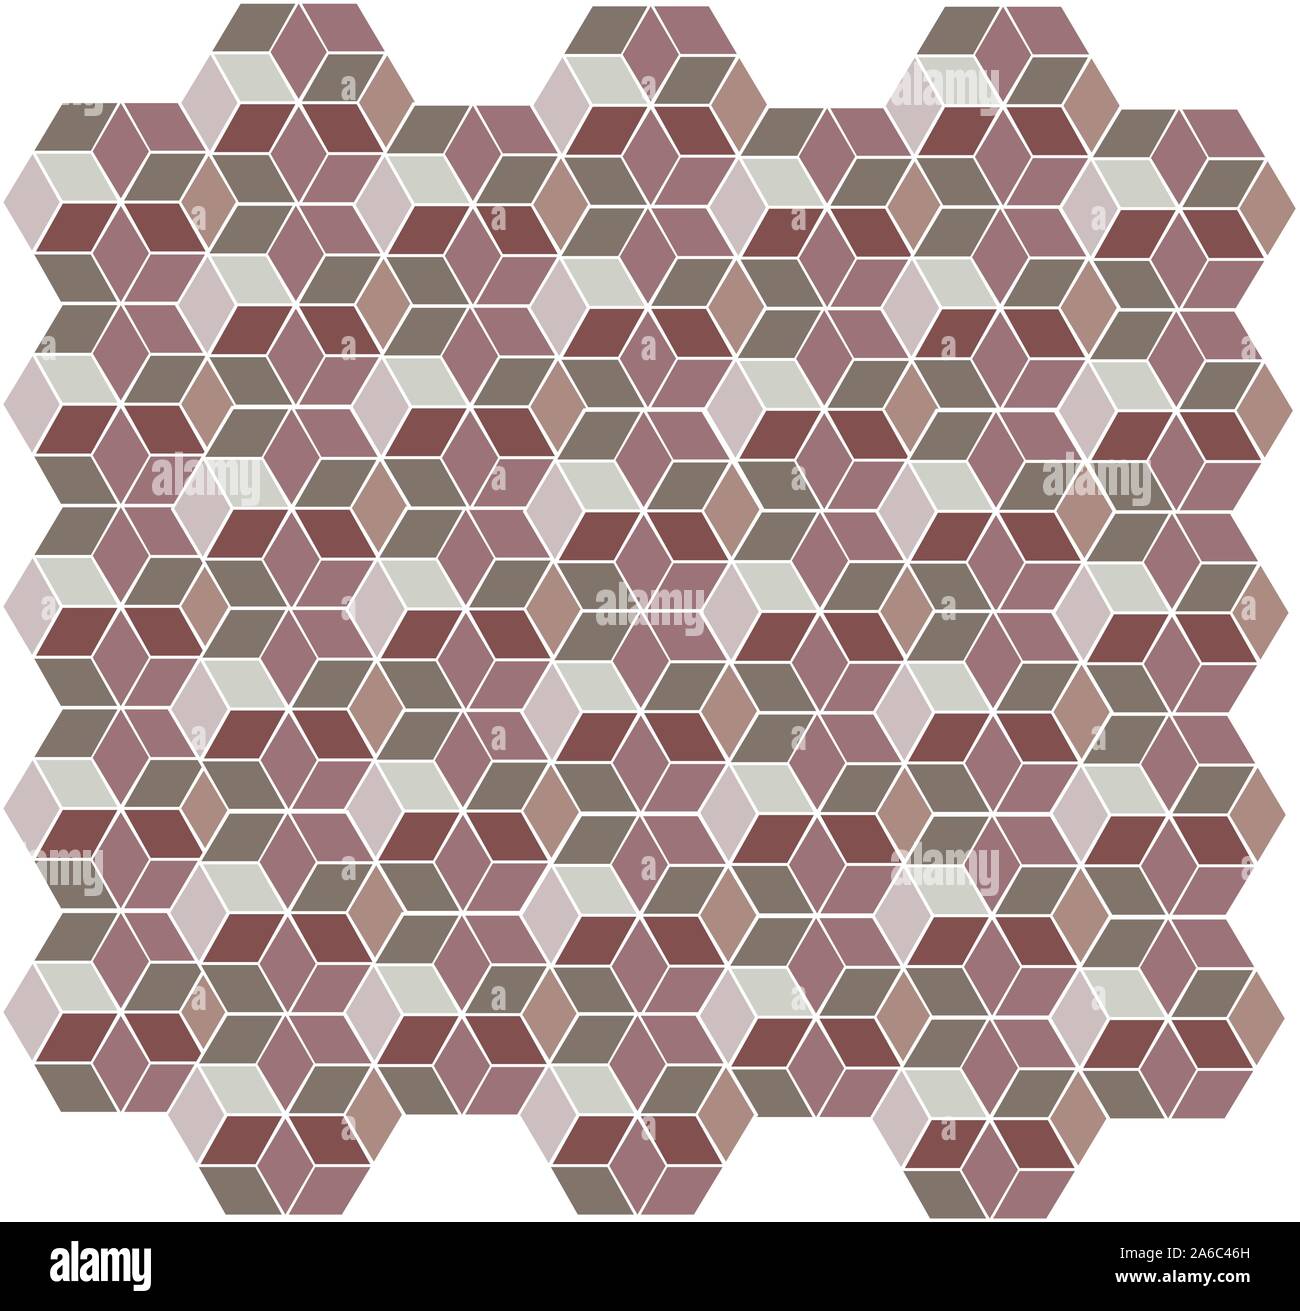 Nahtlose hexagonal, kubische Geometrische buntes Mosaik Muster Stock Vektor